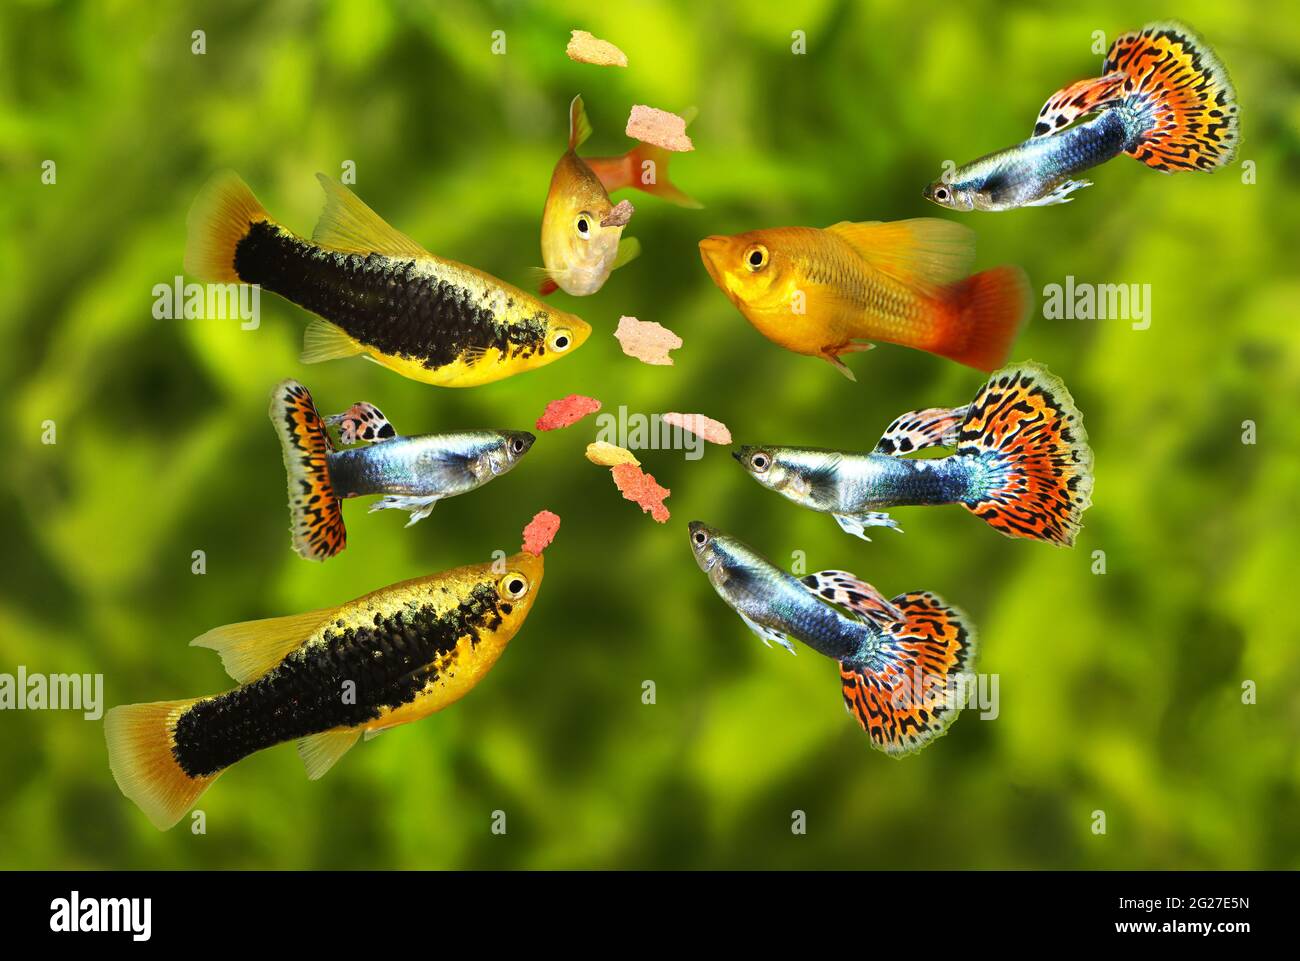 Feeding aquarium fish eating flake food swarm feeding tetra aquarium fish  Stock Photo - Alamy